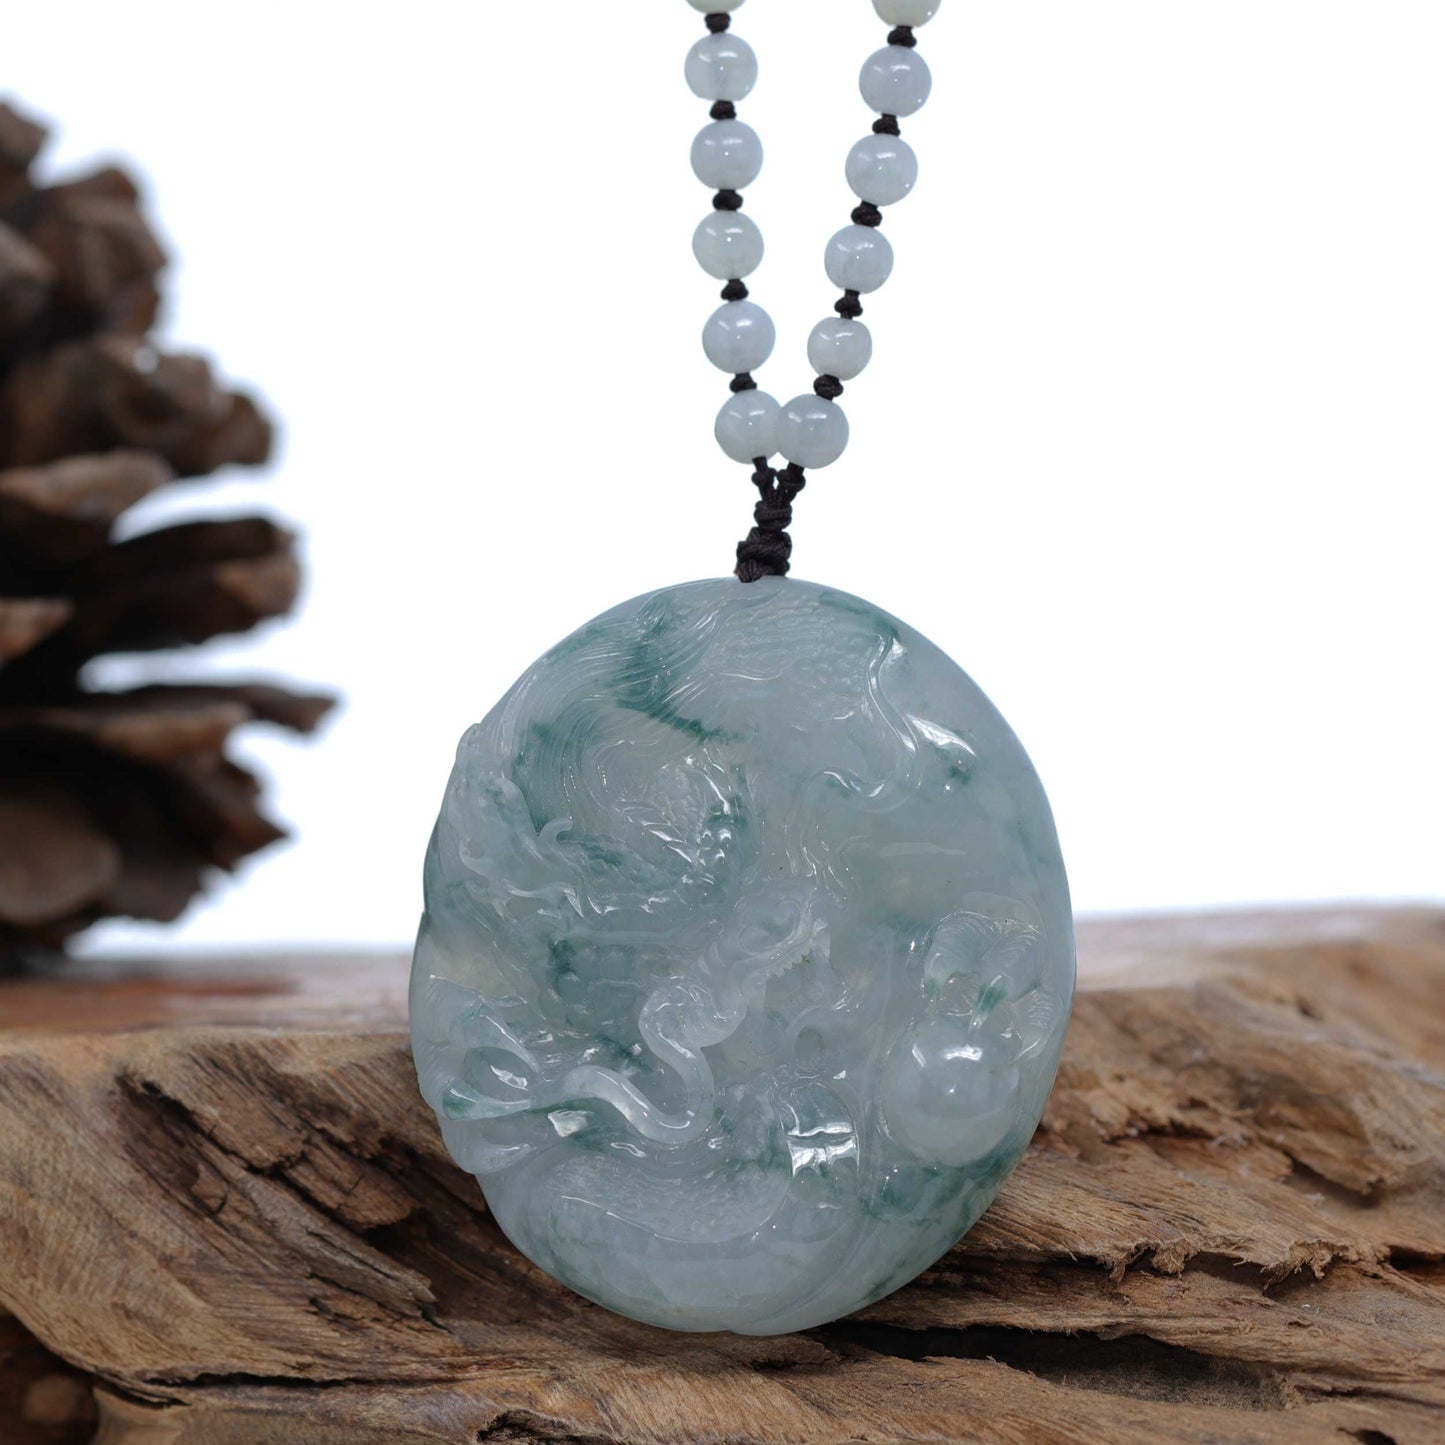 RealJade¨ Co. "Soring Dragon" Natural Jadeite Jade Blue Green Pendant Necklace For Men, Collectibles.